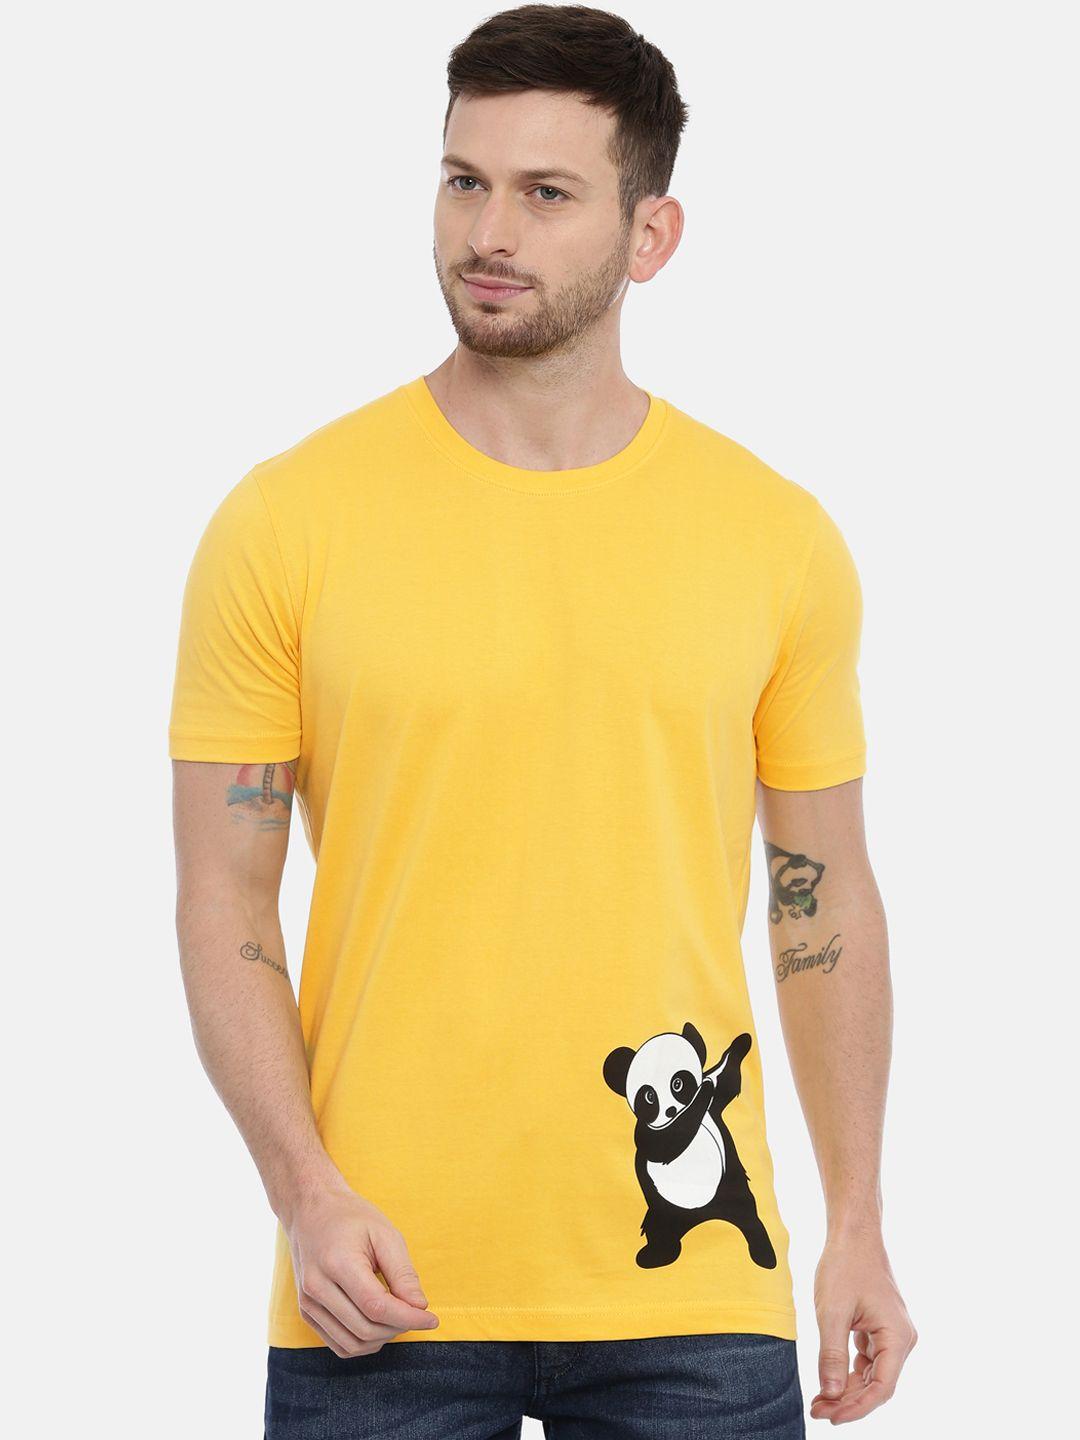 bushirt men yellow  white printed round neck pure cotton t-shirt